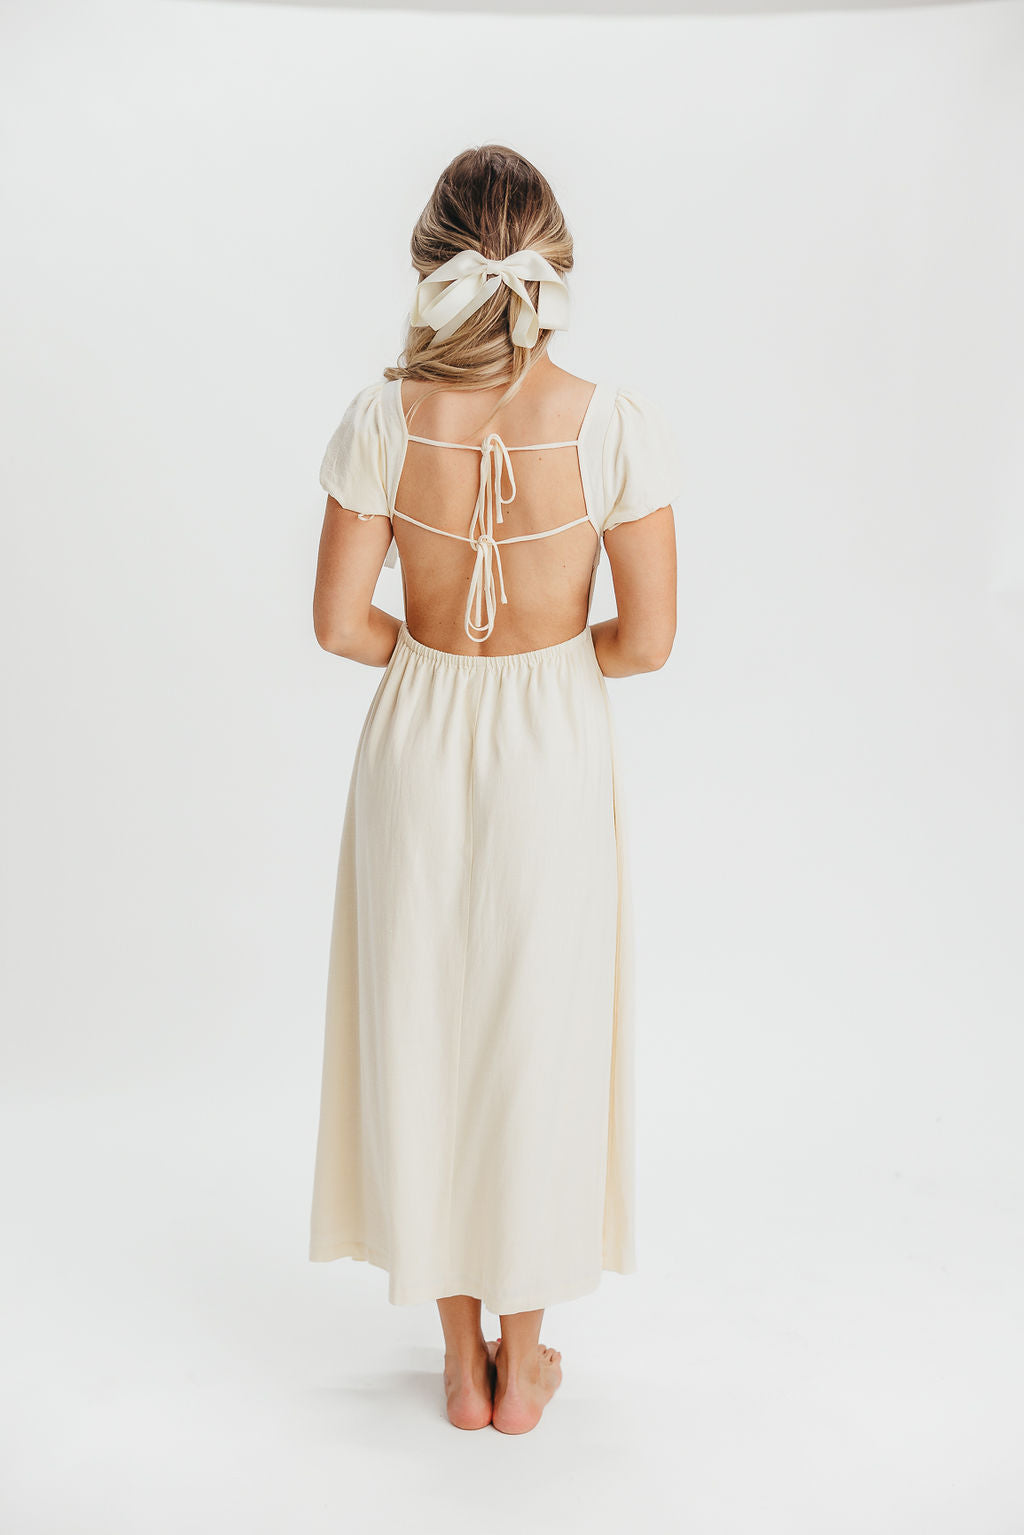 August Open Back Midi Dress in Ivory Cream - Bump Friendly